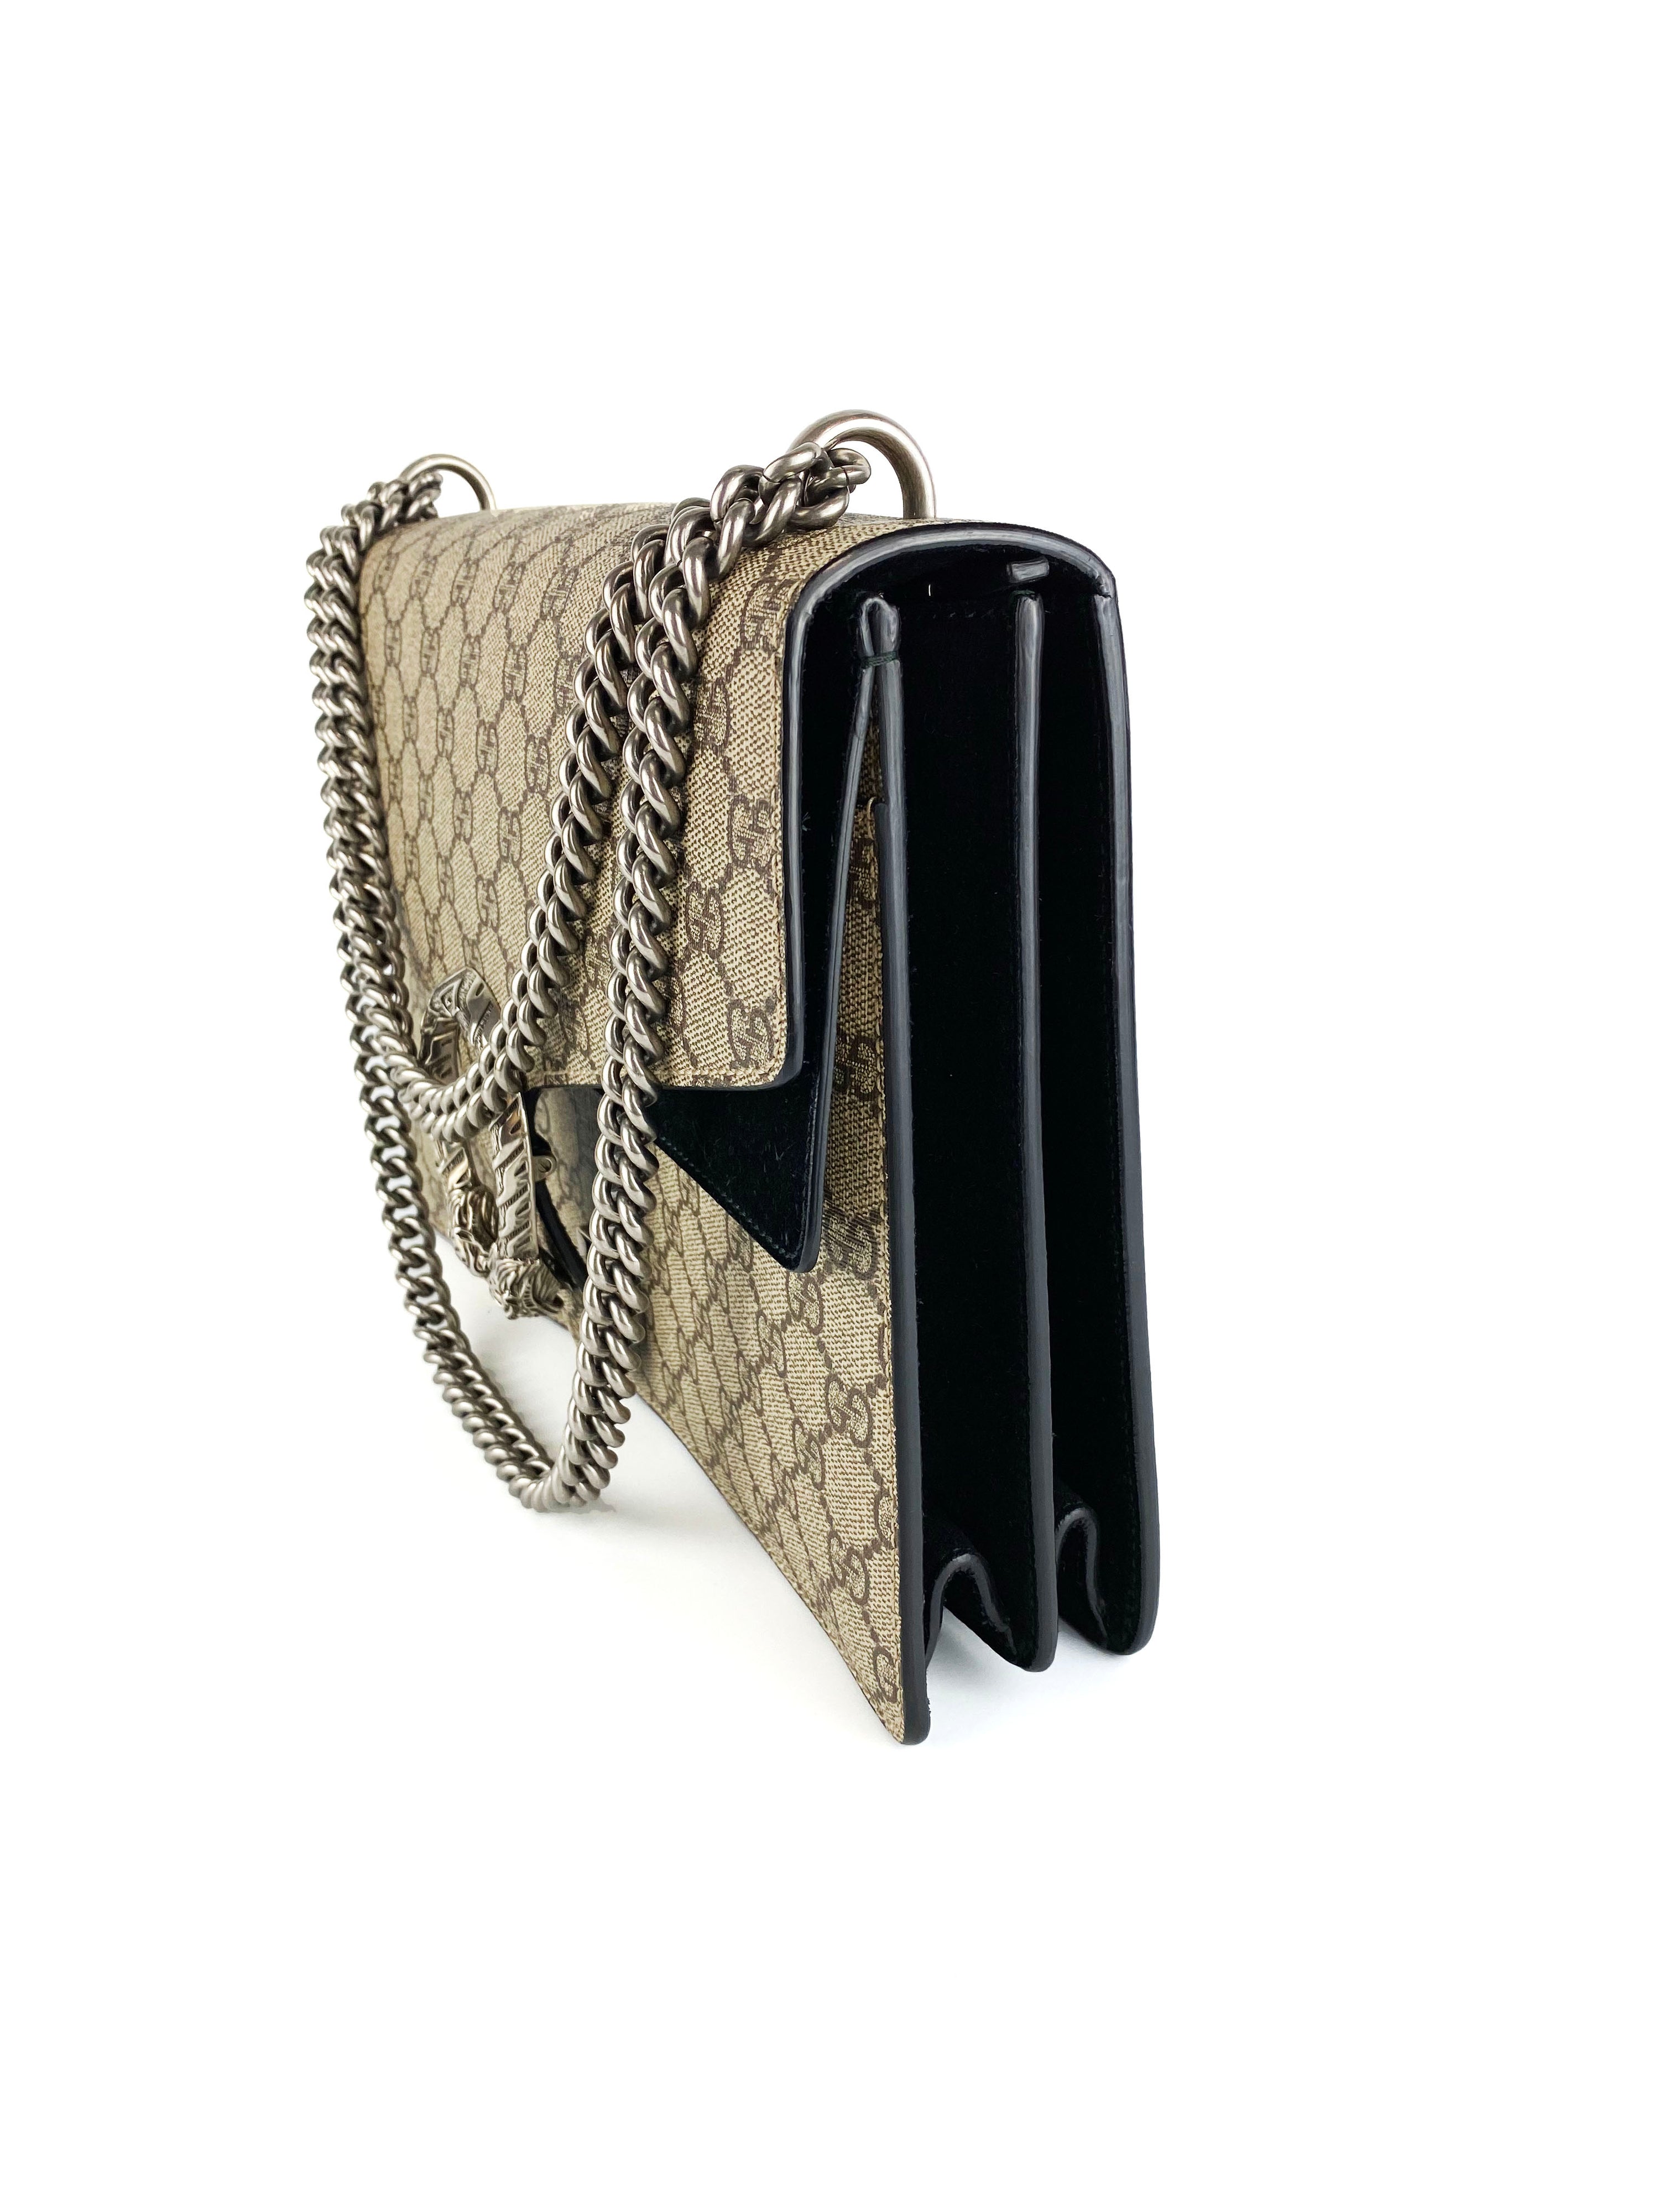 Gucci Dionysus Monogram Bag with Black Suede Trim